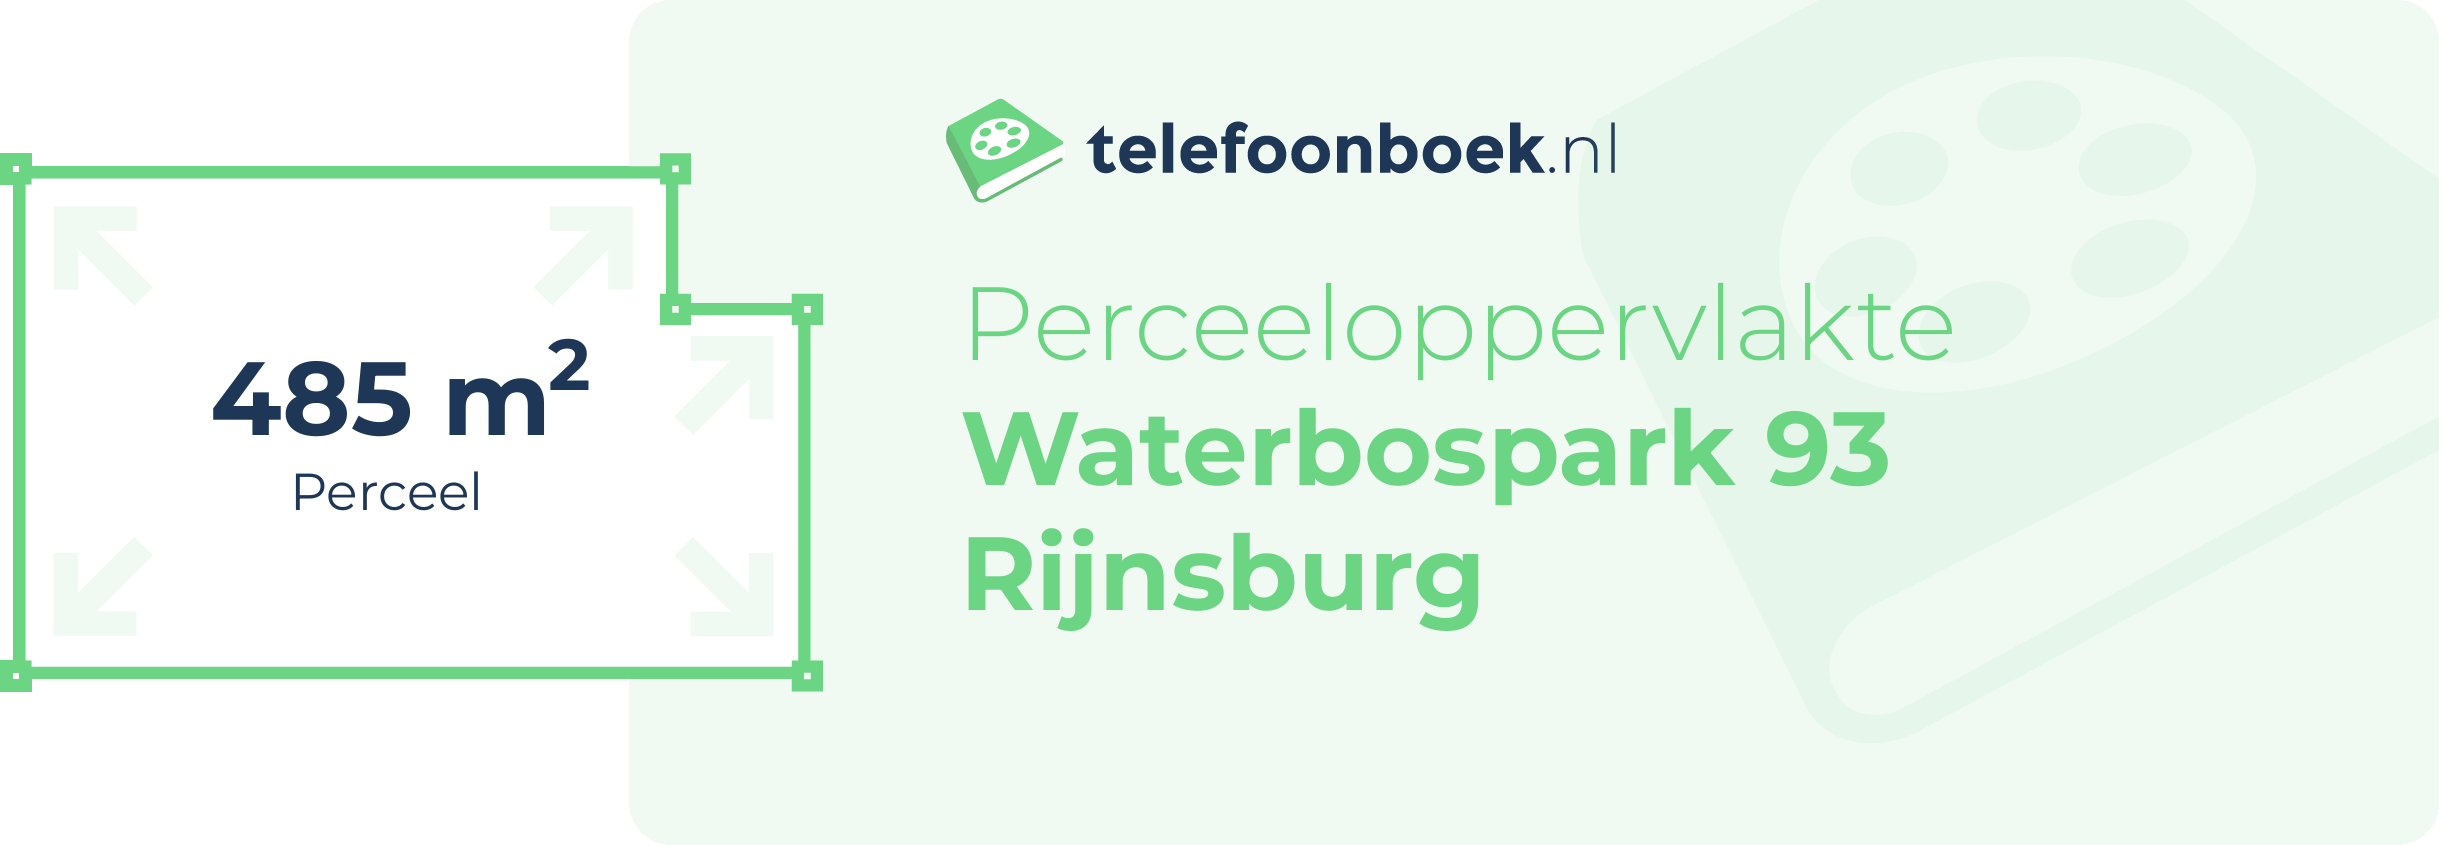 Perceeloppervlakte Waterbospark 93 Rijnsburg